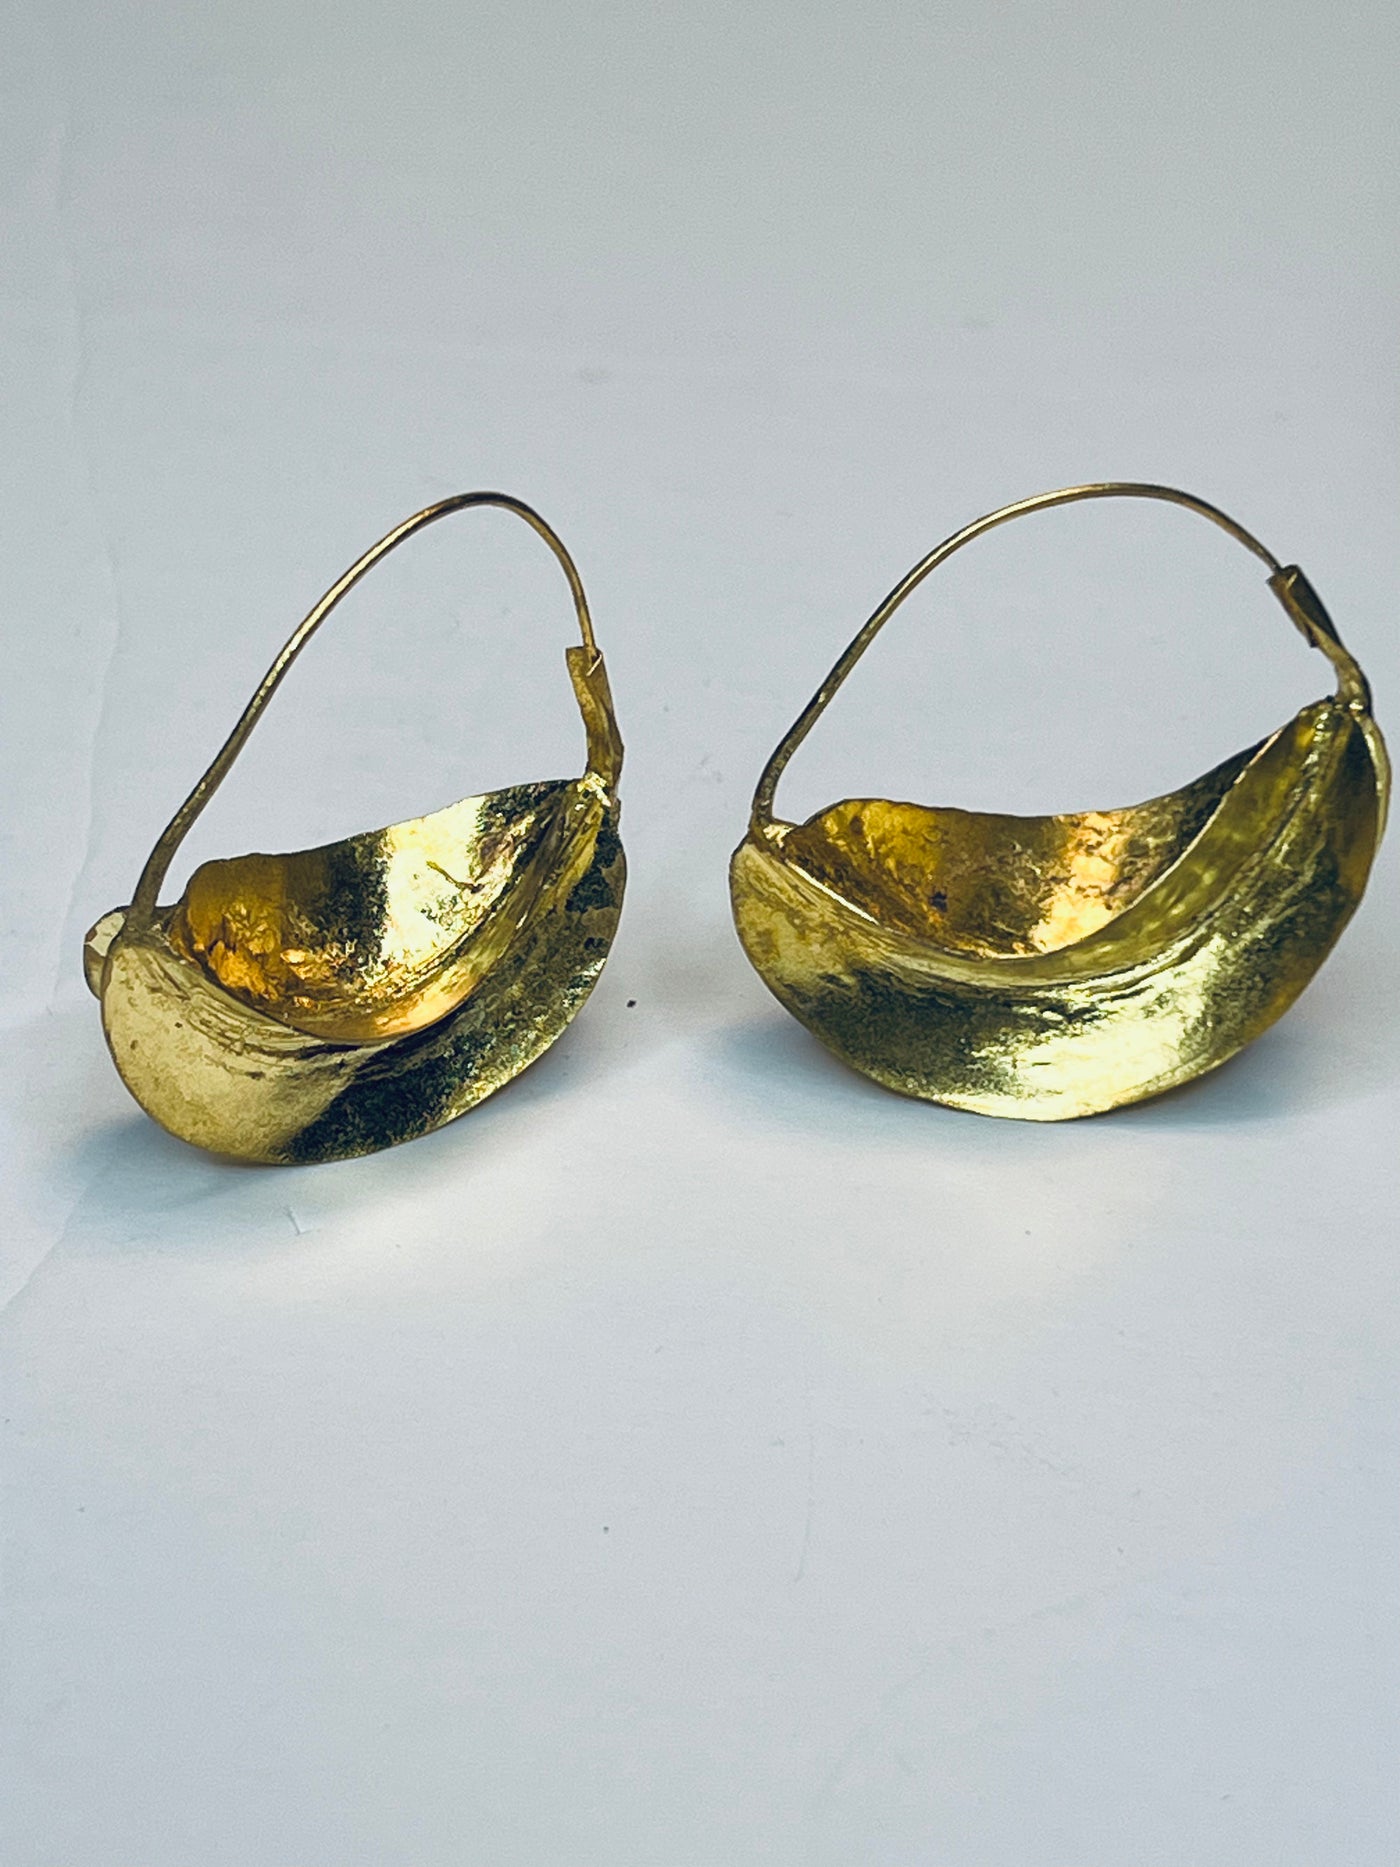 Unique Handmade Small Fulani Gold Plated Earrings (Wholesale)